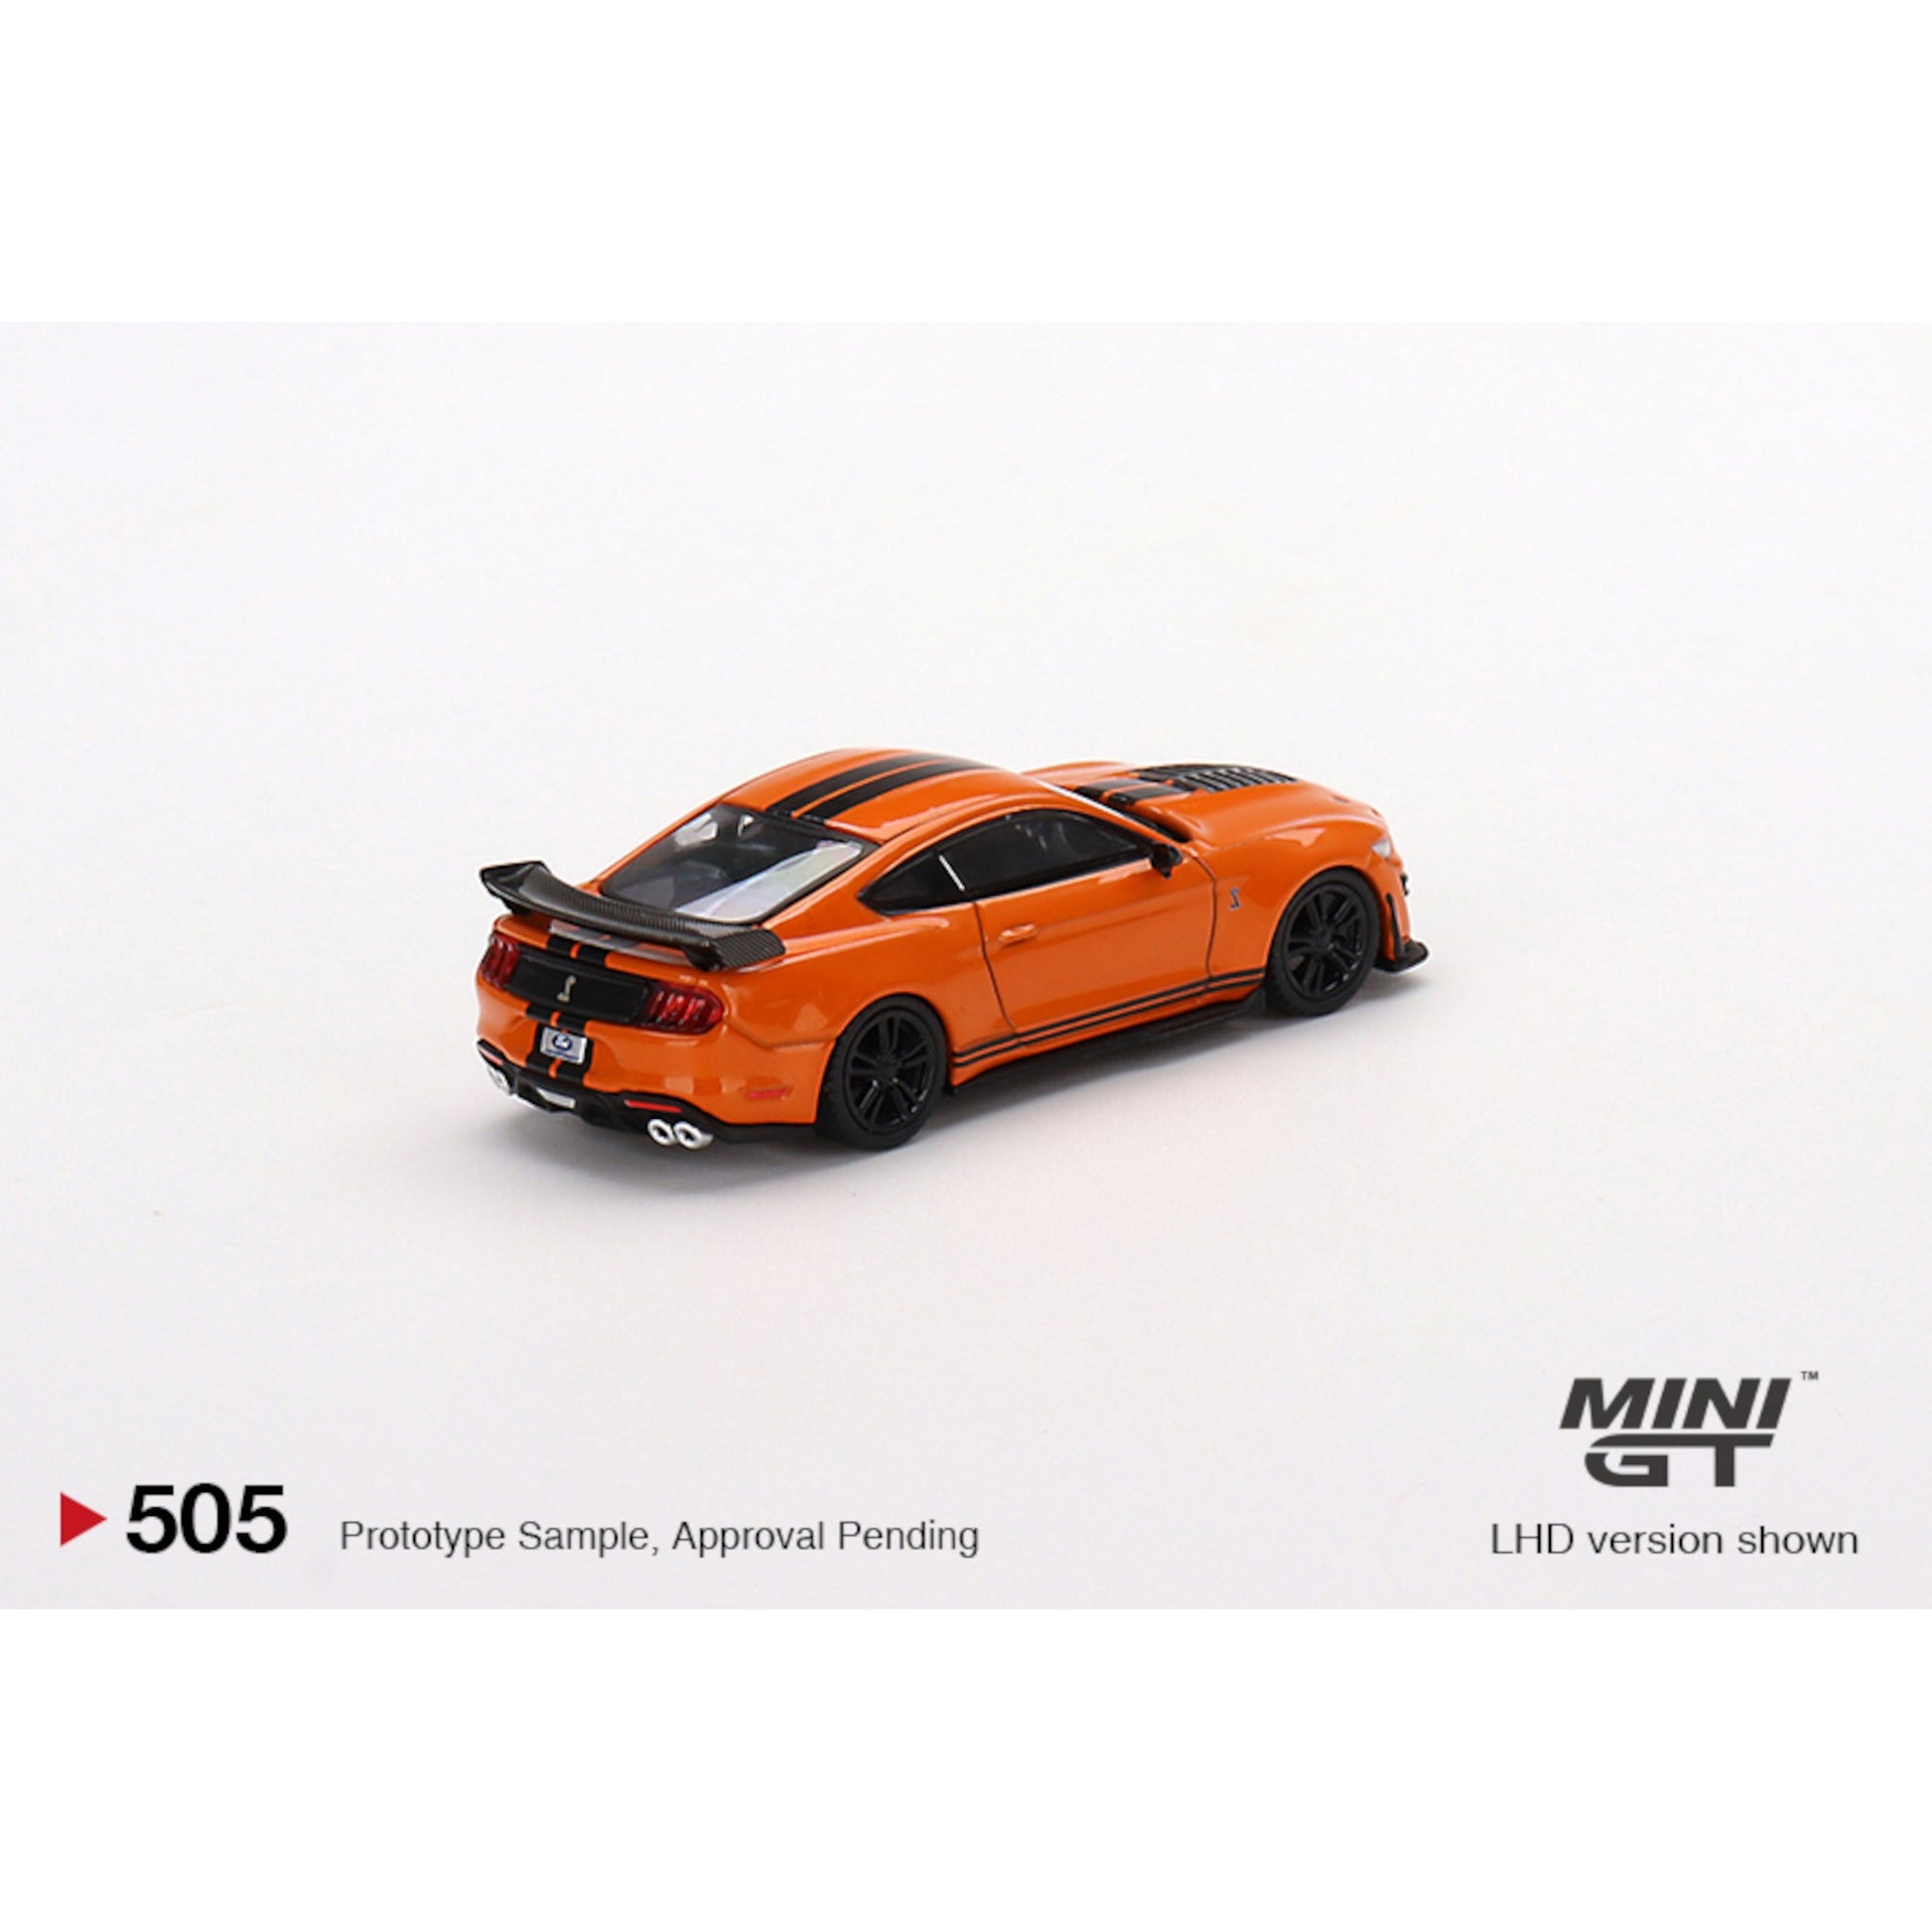 Ford Mustang Shelby GT500 twister Orange RHD Mini GT 1/64 - MGT00505-R